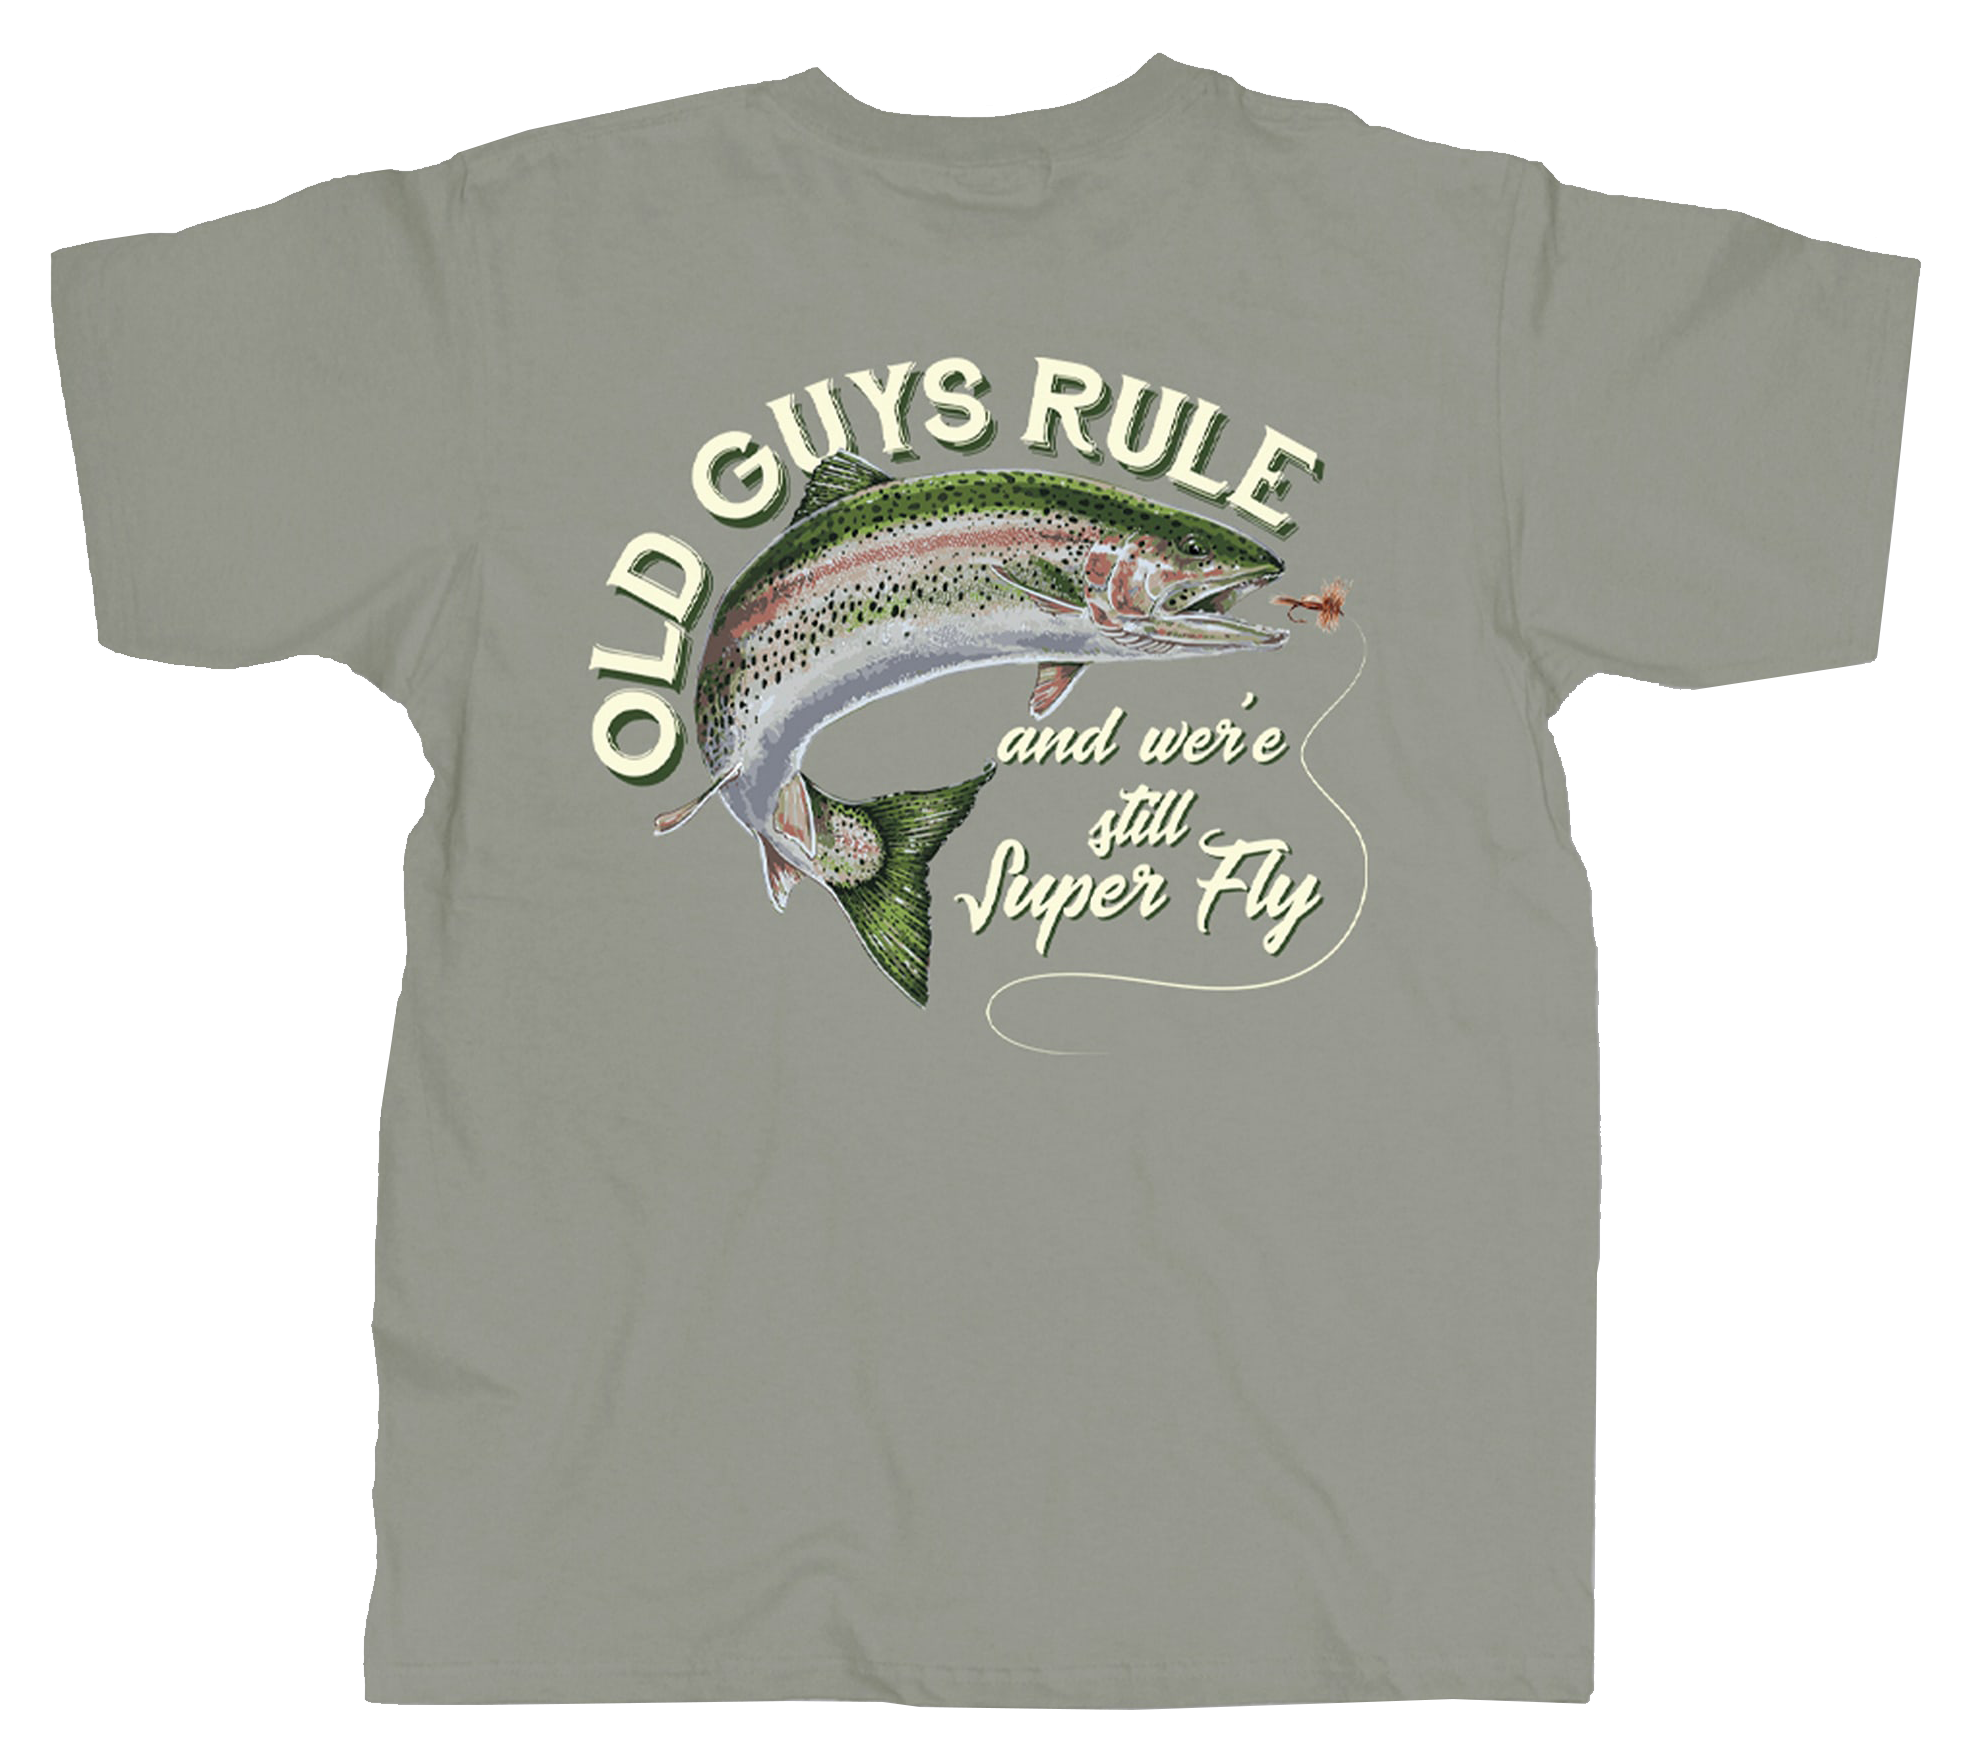 Old Guys Rule Super Fly Short-Sleeve T-Shirt for Men